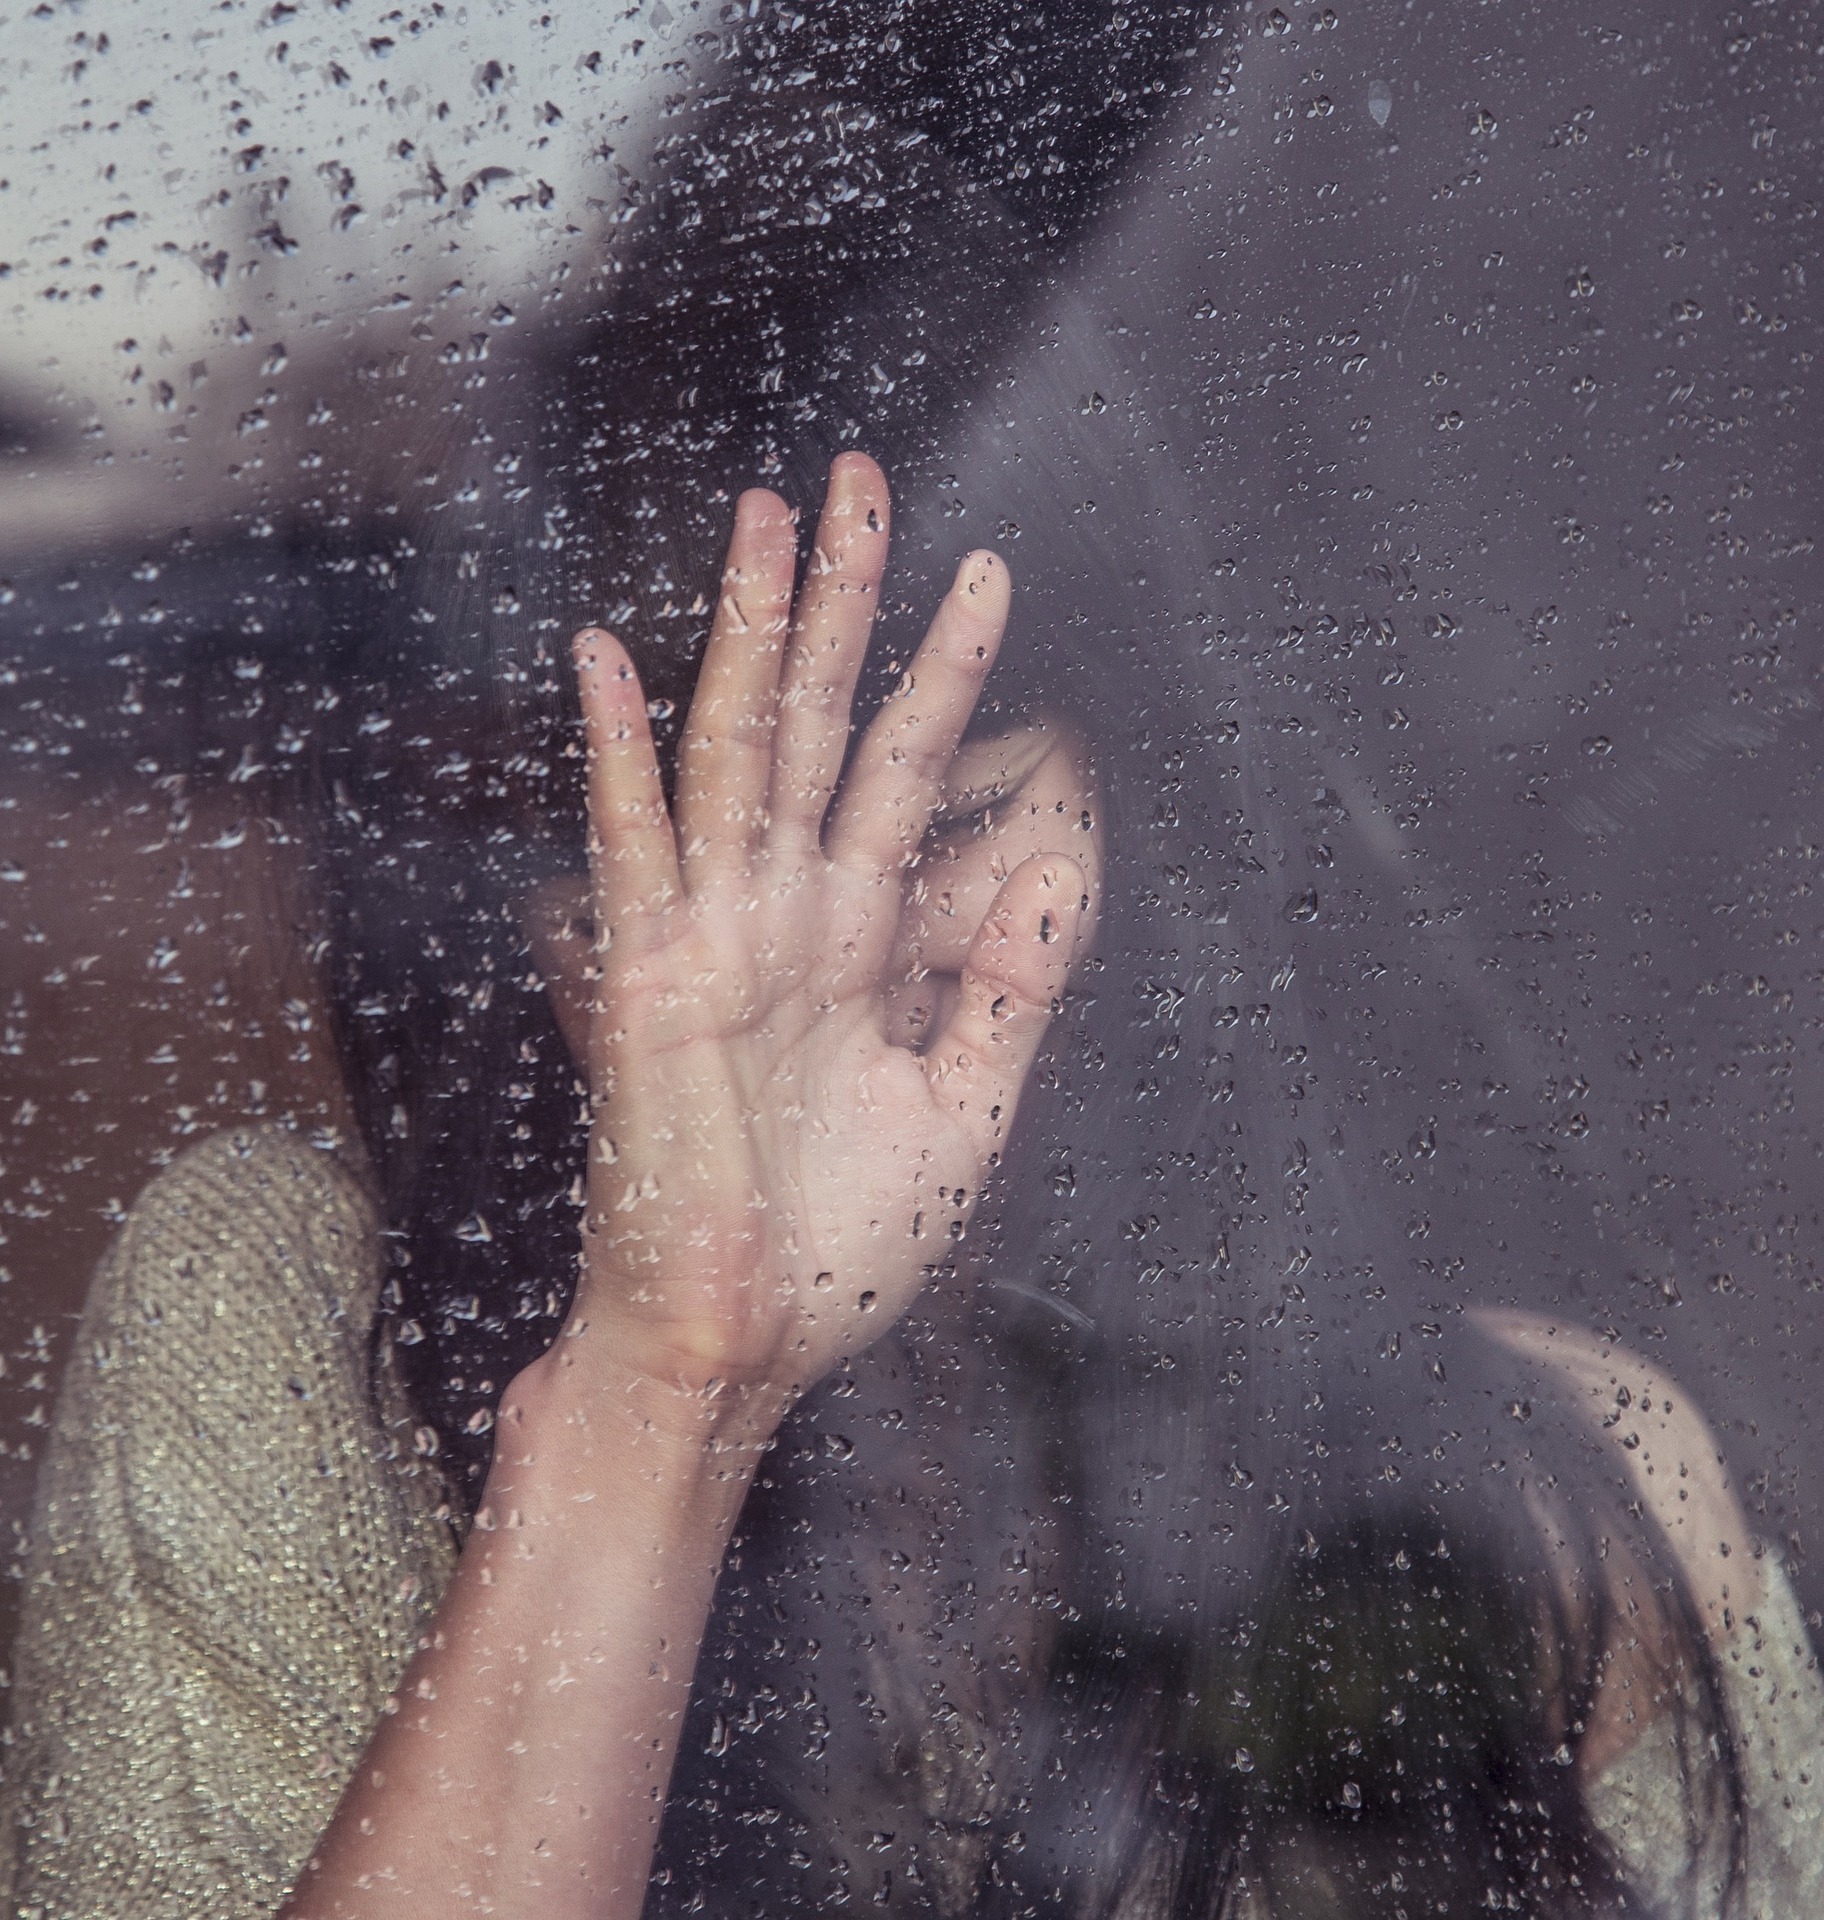 mladé dievča stojace za zaroseným oknom